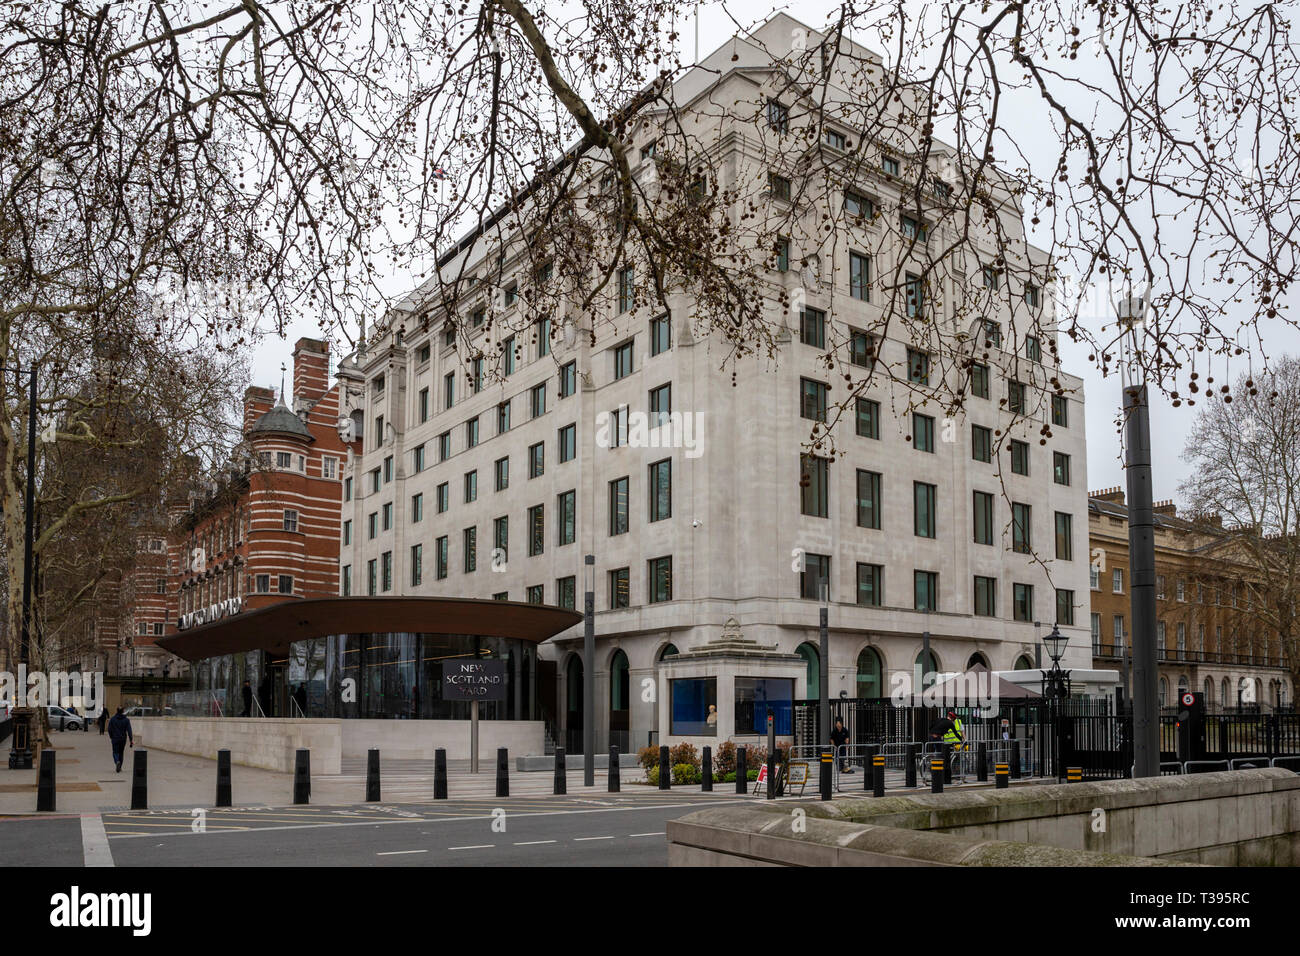 New Scotland Yard, Victoria Embankment, London, Friday, March 22, 2019. Photo: David Rowland / One-Image.com Stock Photo